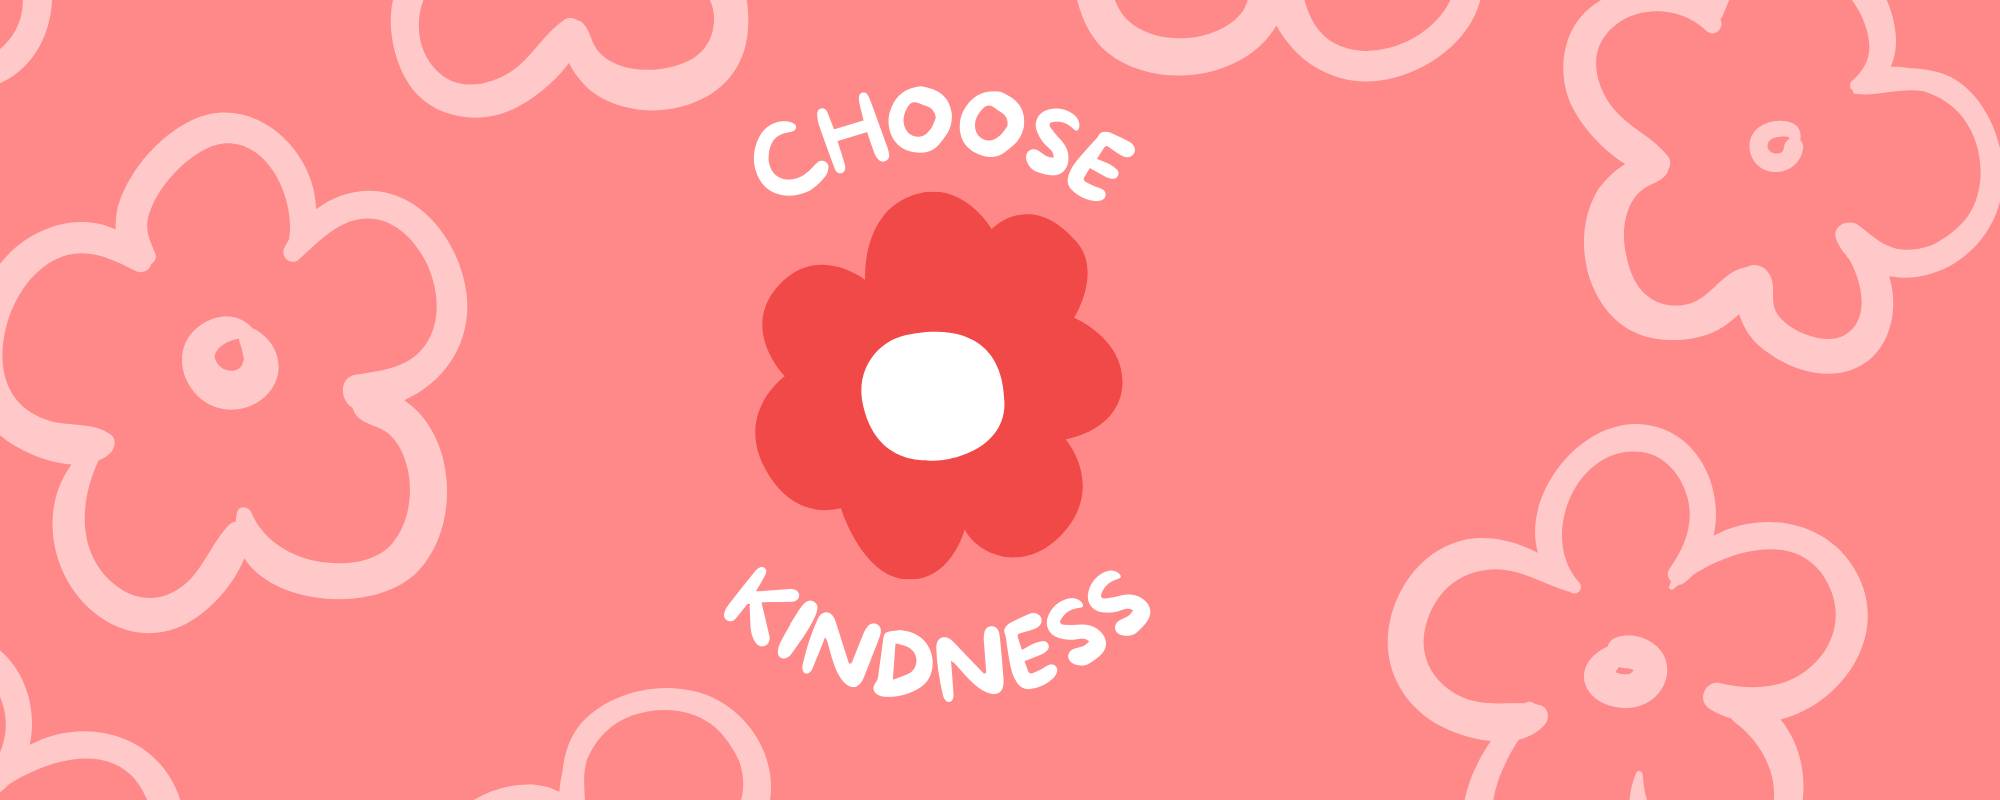 Choose kindness!